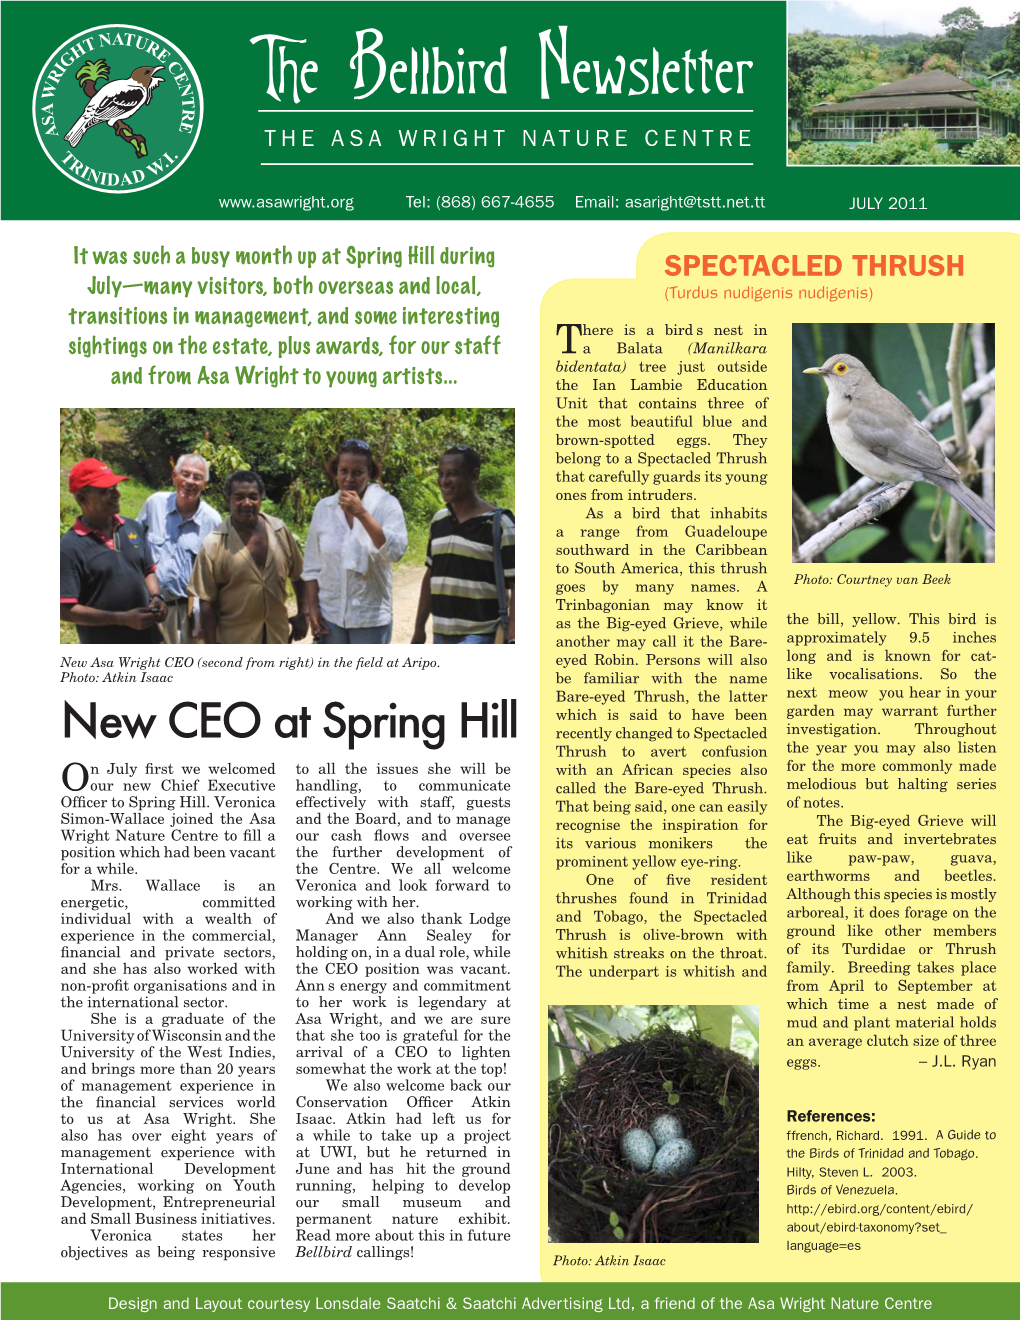 The Bellbird Newsletter the ASA WRIGHT NATURE CENTRE